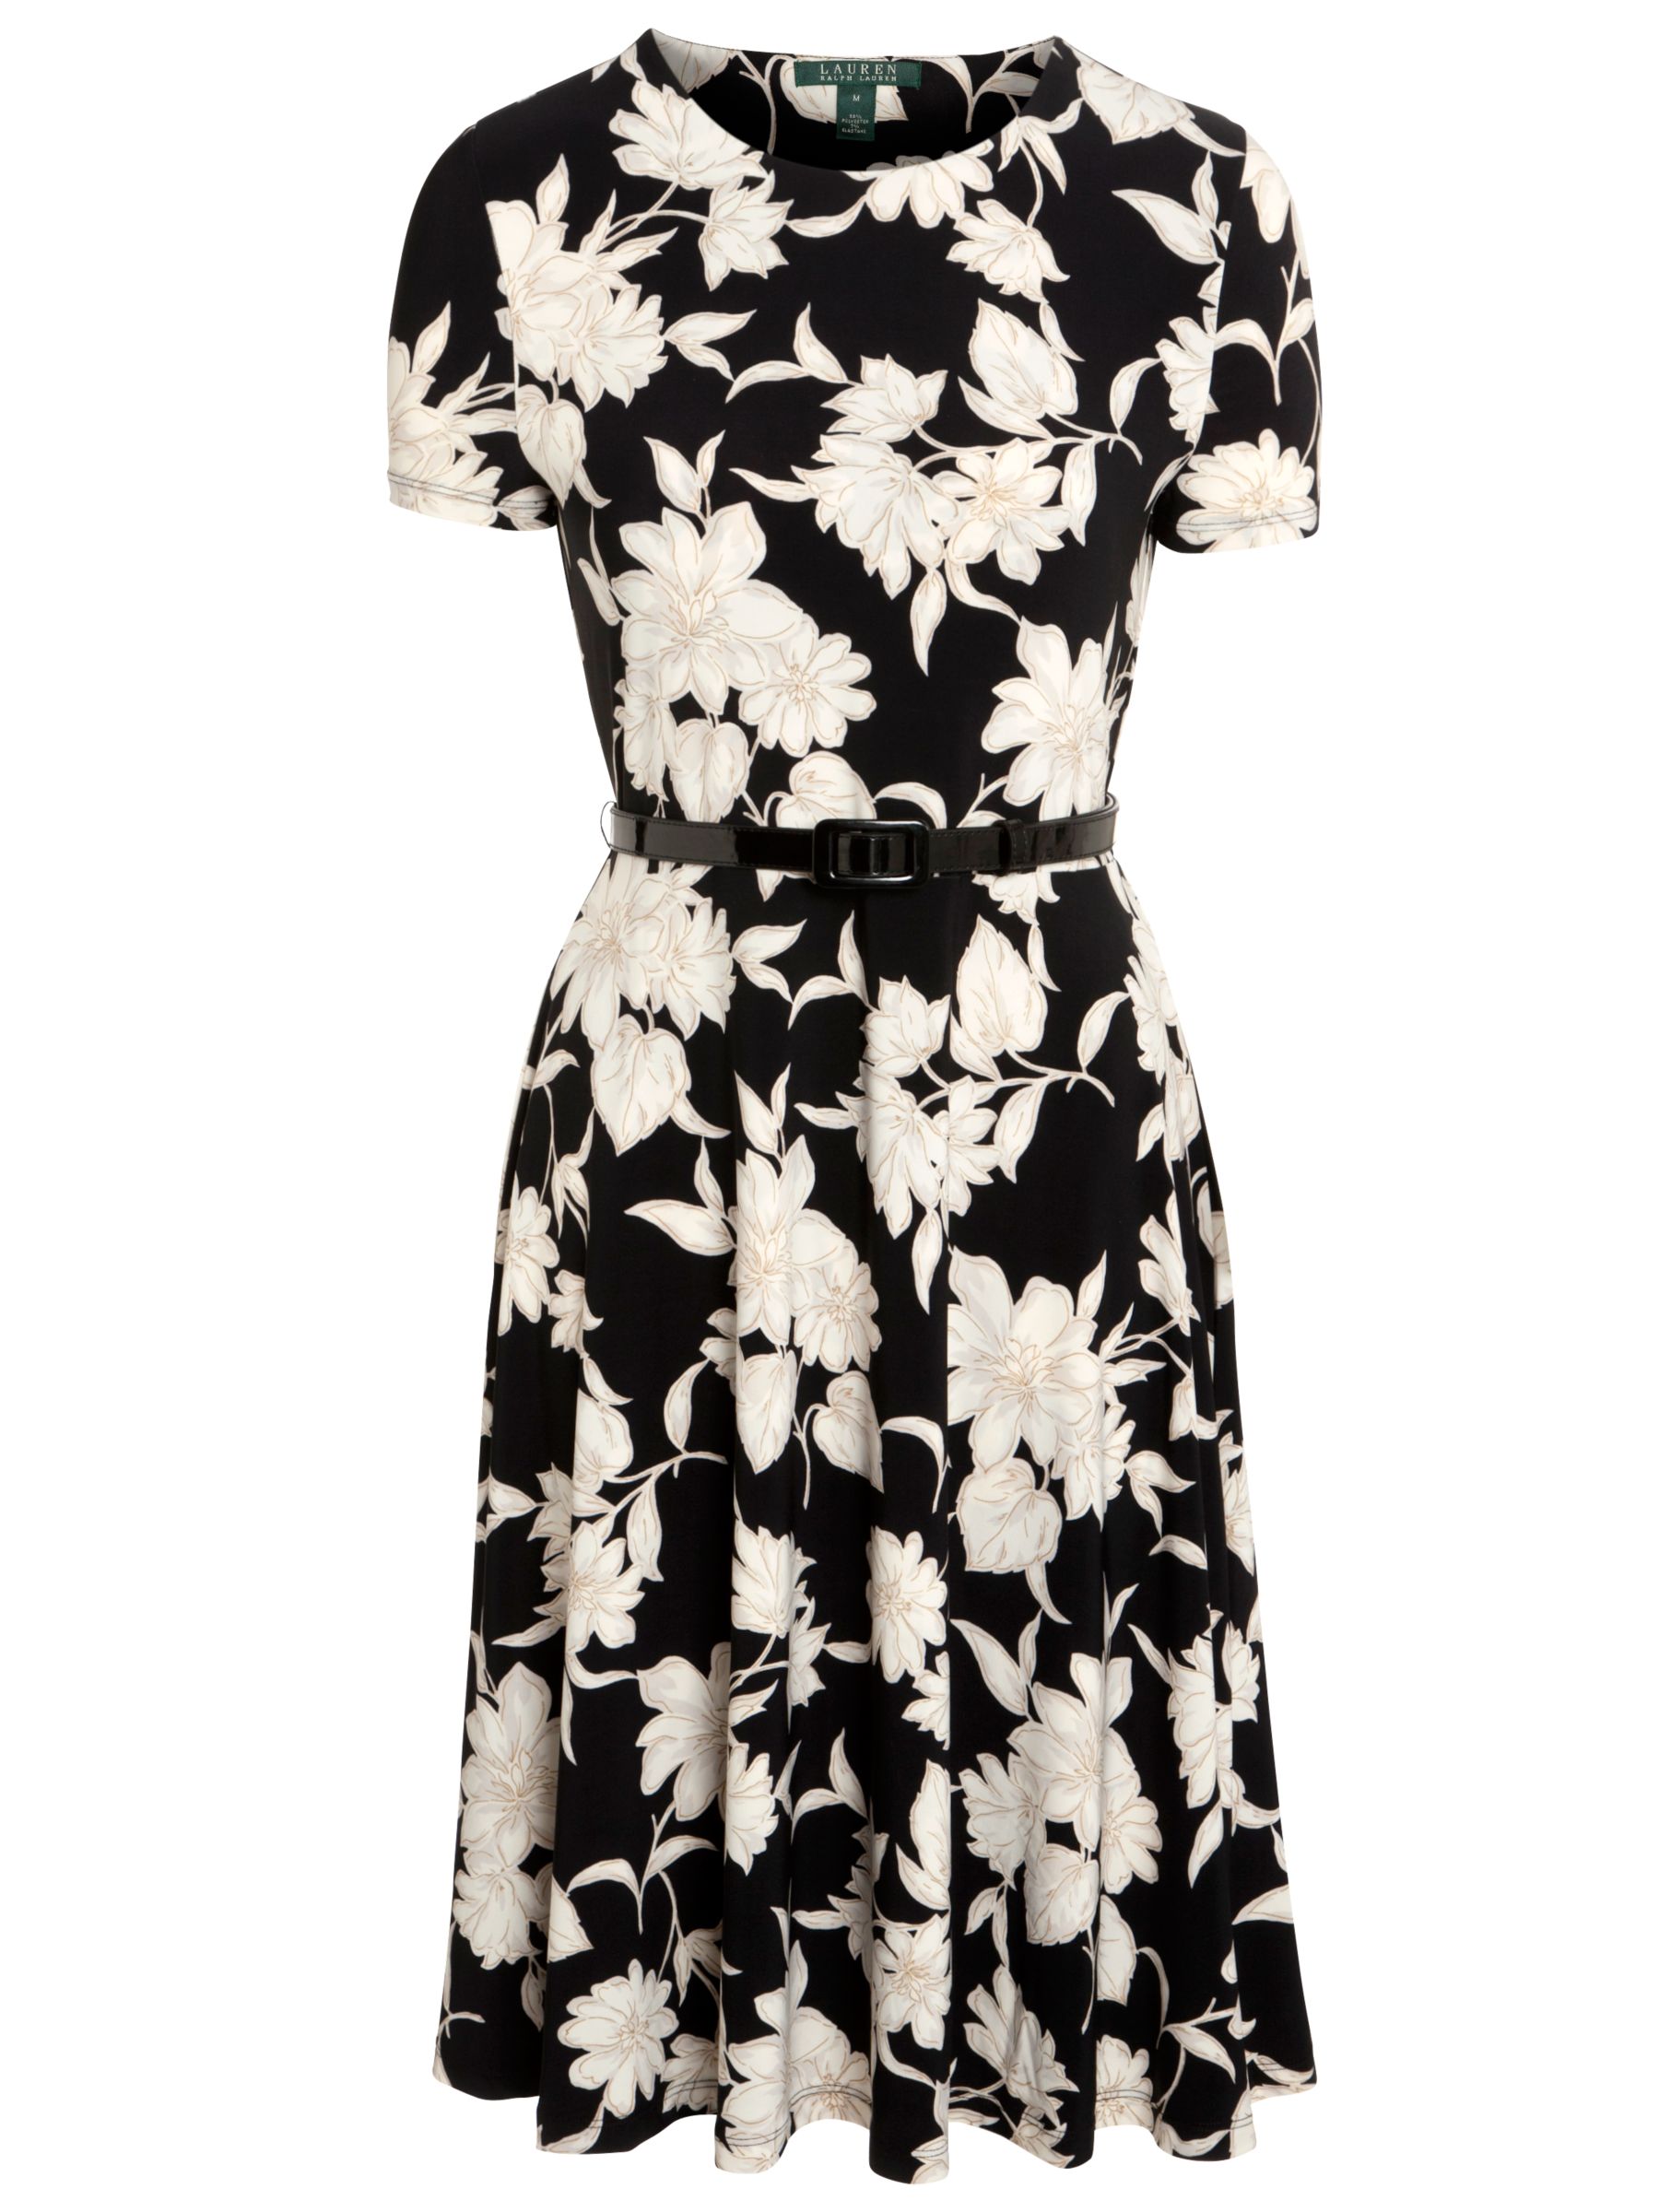 Lauren by Ralph Lauren Floral-Print Jersey Dress, Black/Ivory at John ...